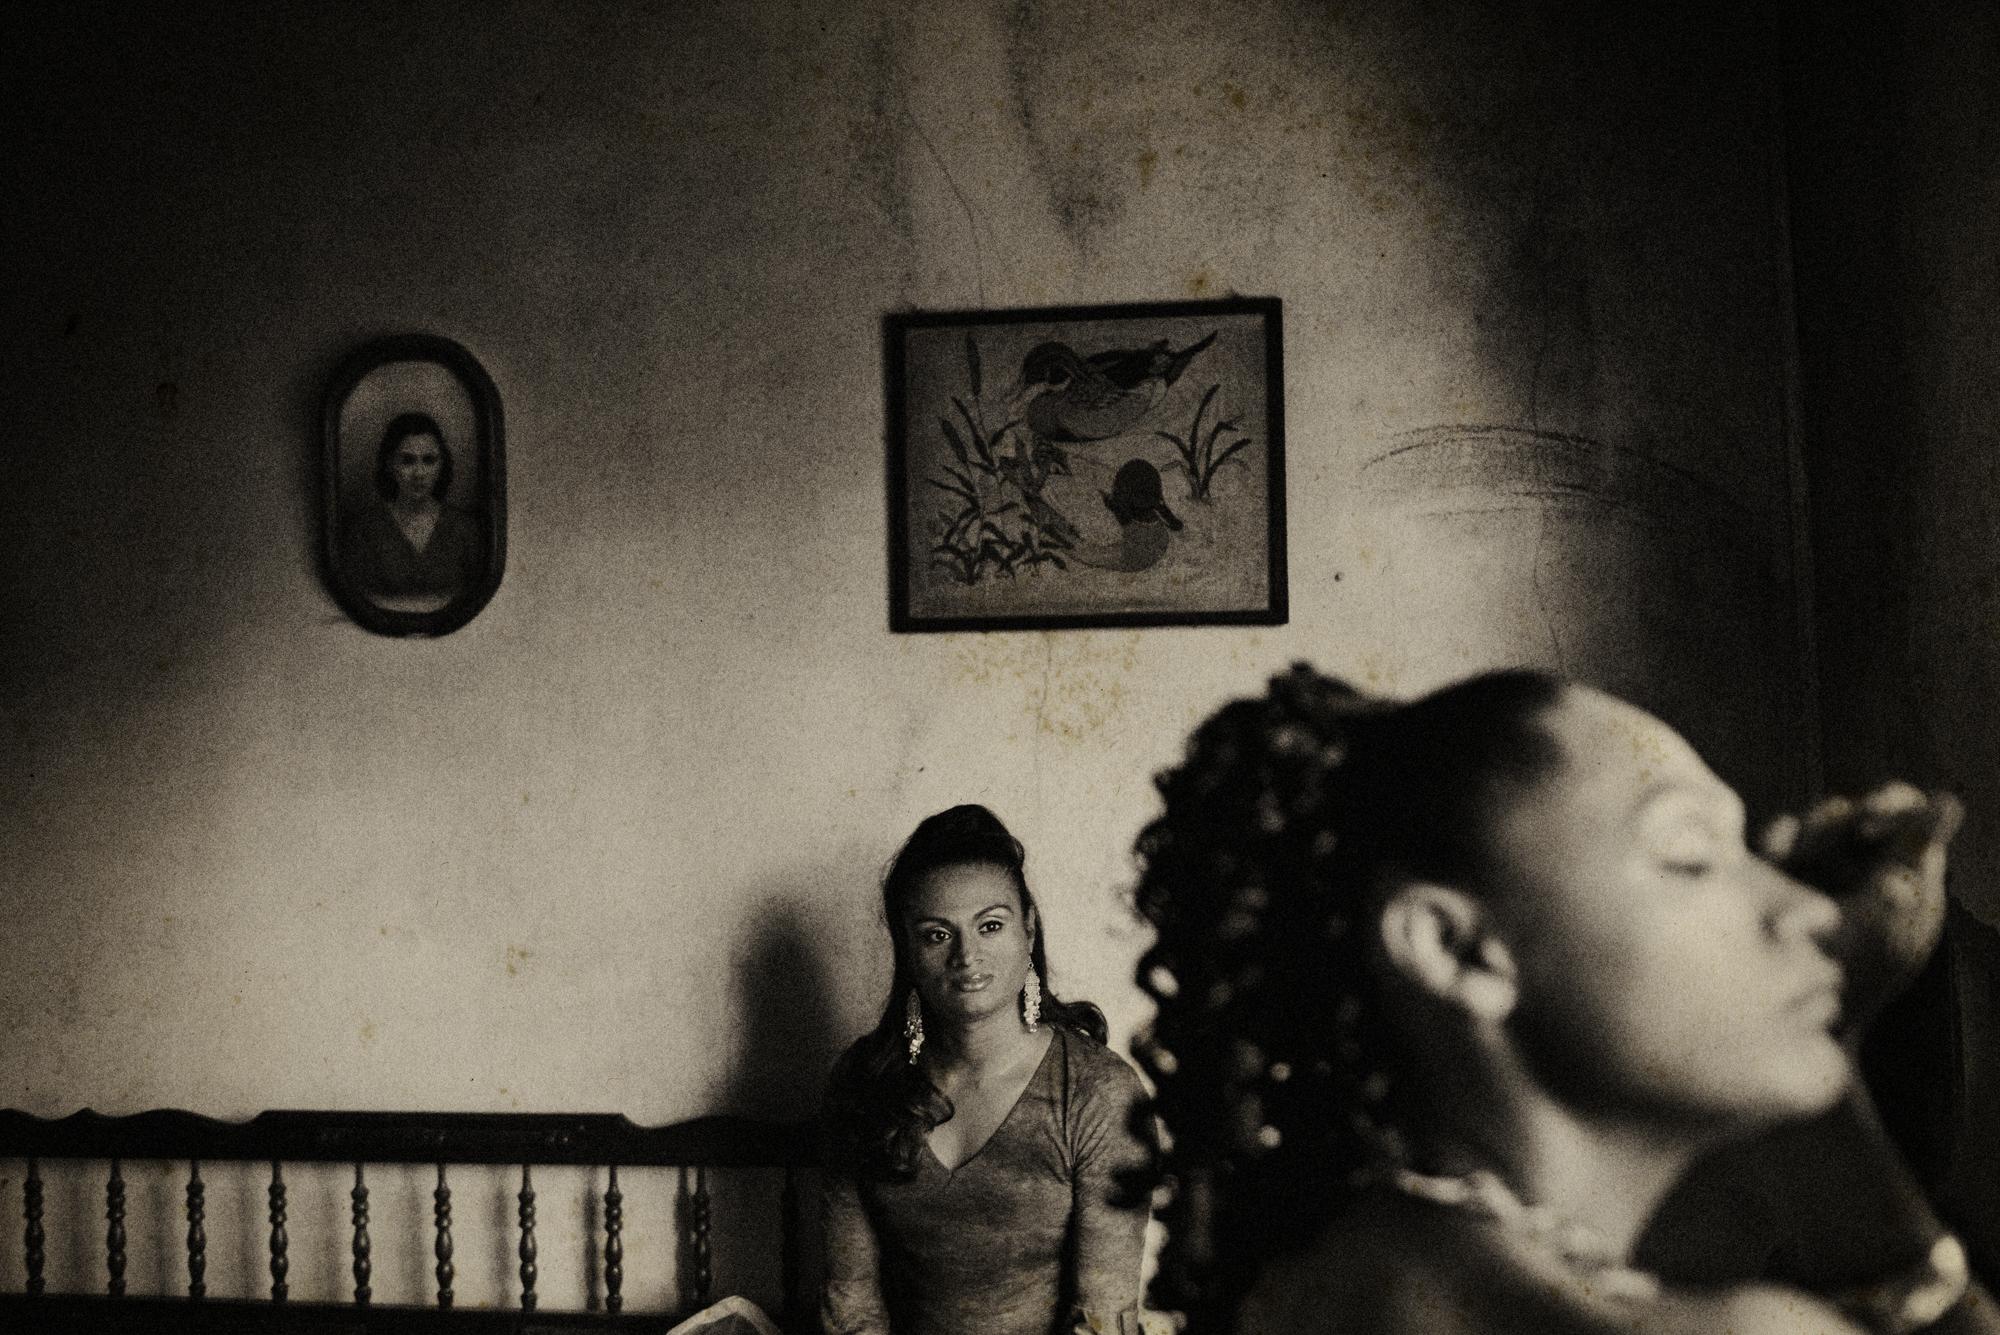 Forced identity - Honduras.
February 2008.
Alberto Lino "Keisy...